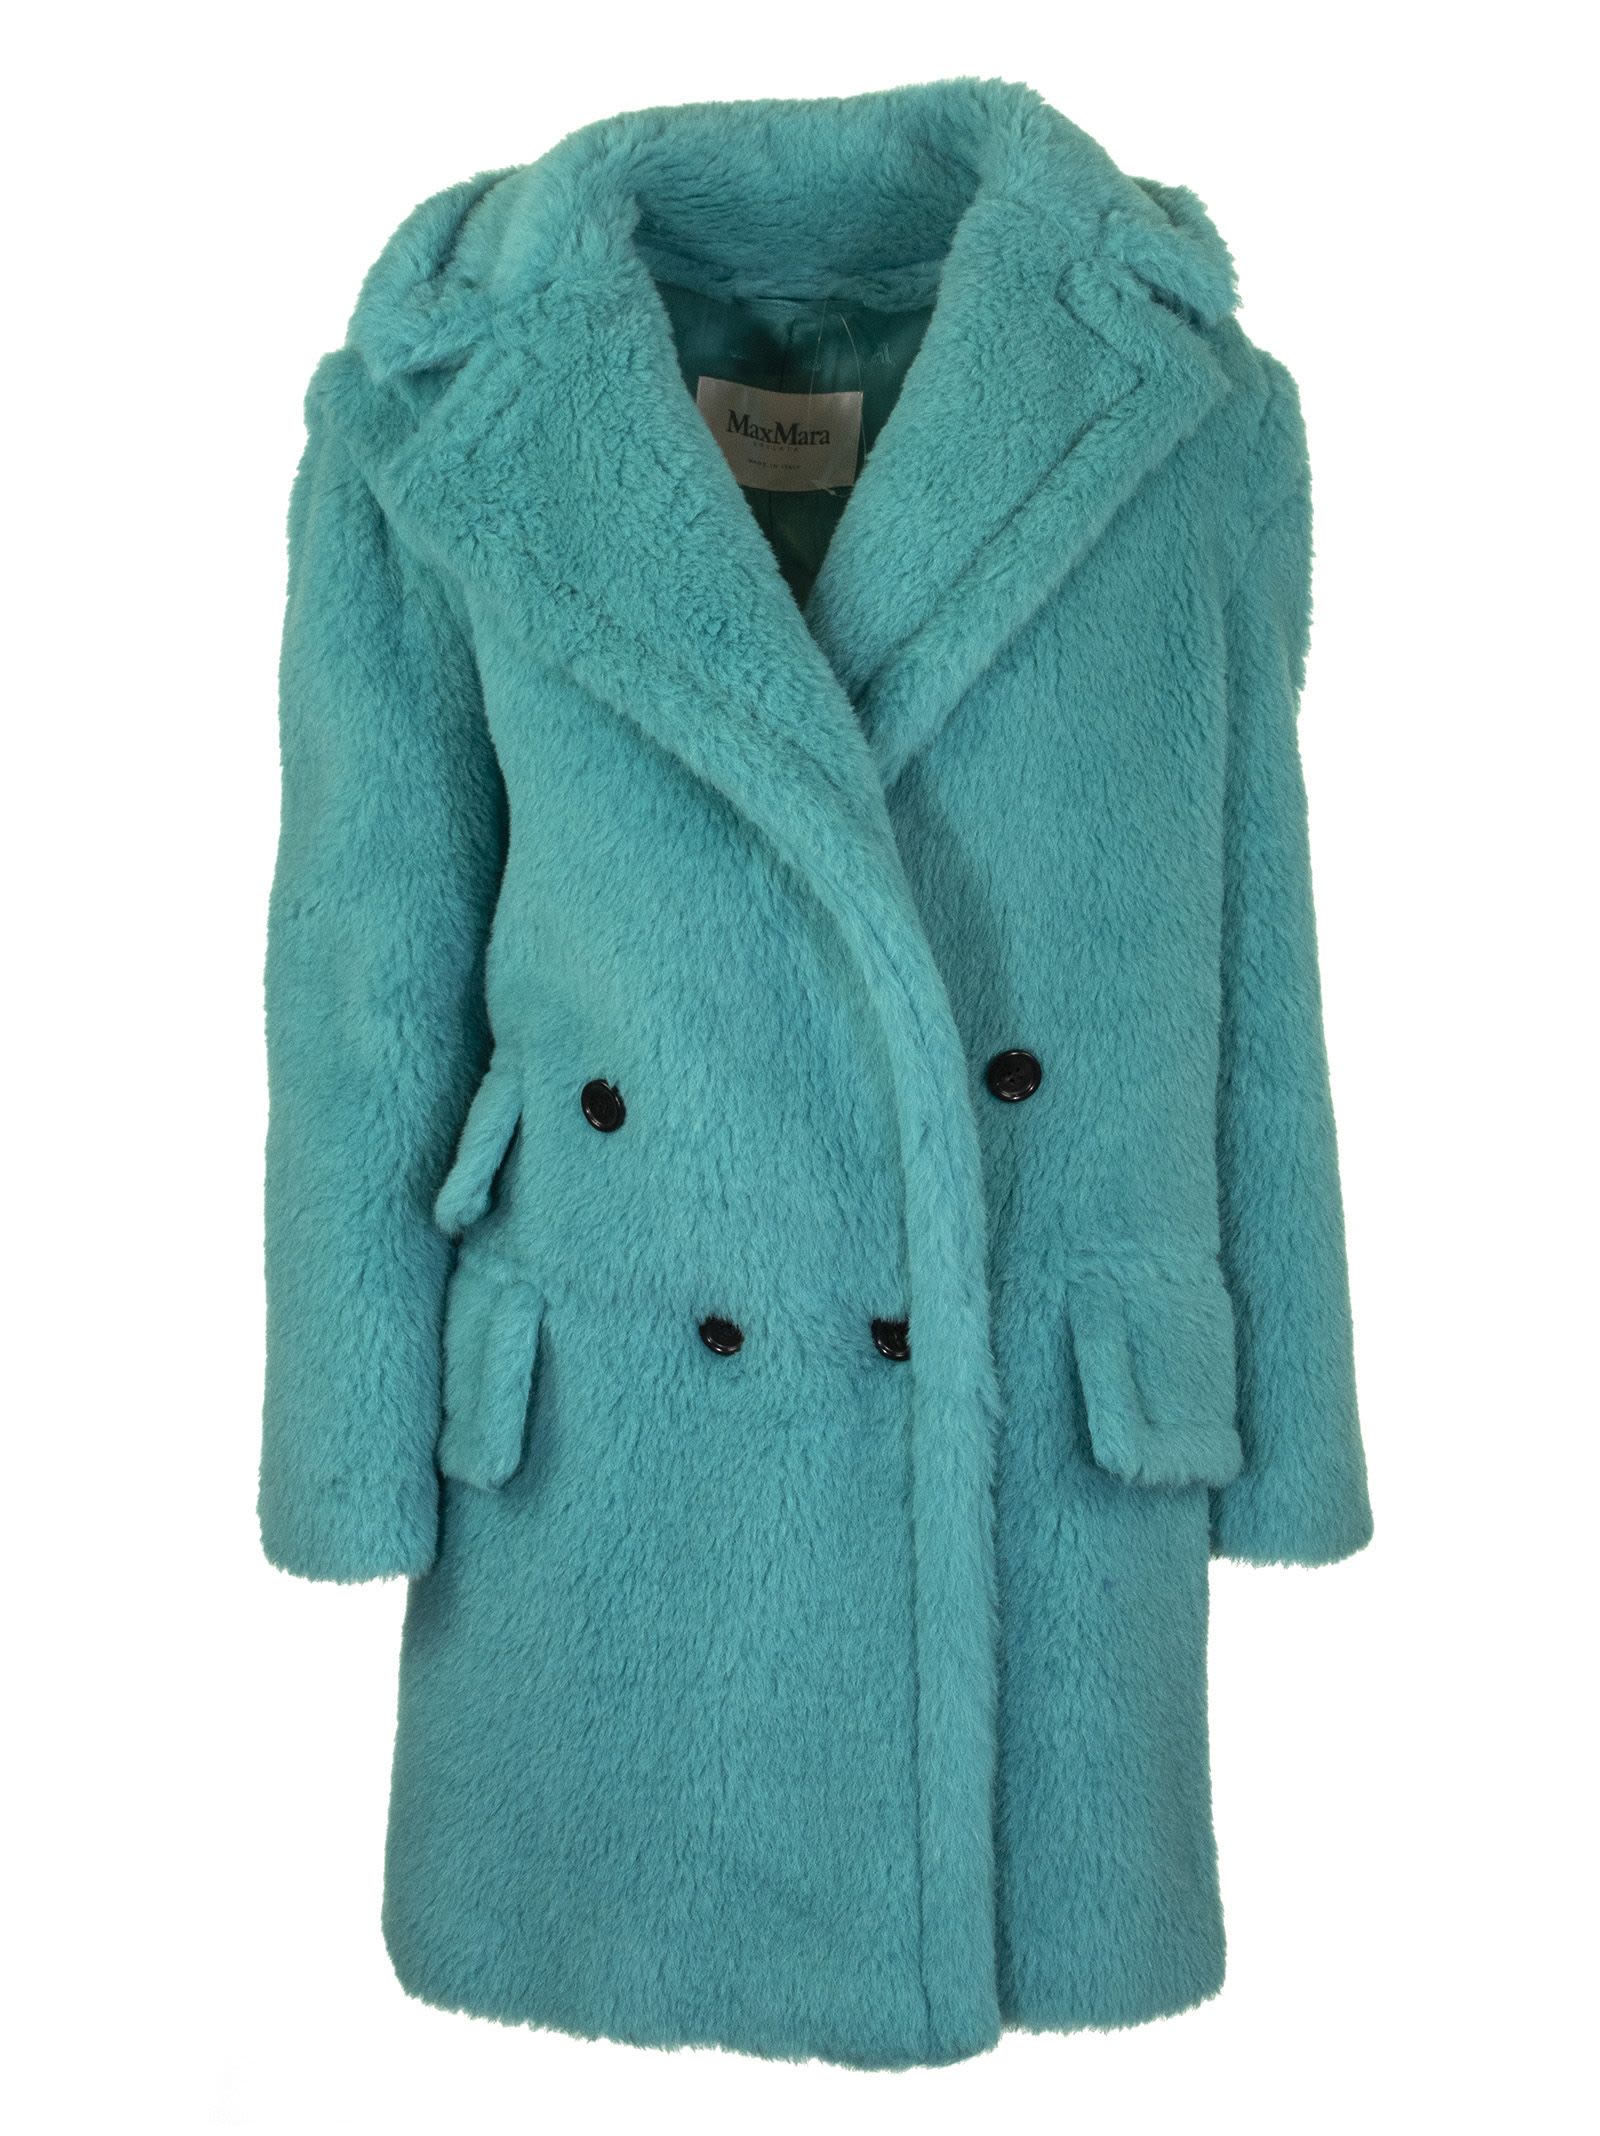 Max Mara Turquoise Coat | Coshio Online Shop